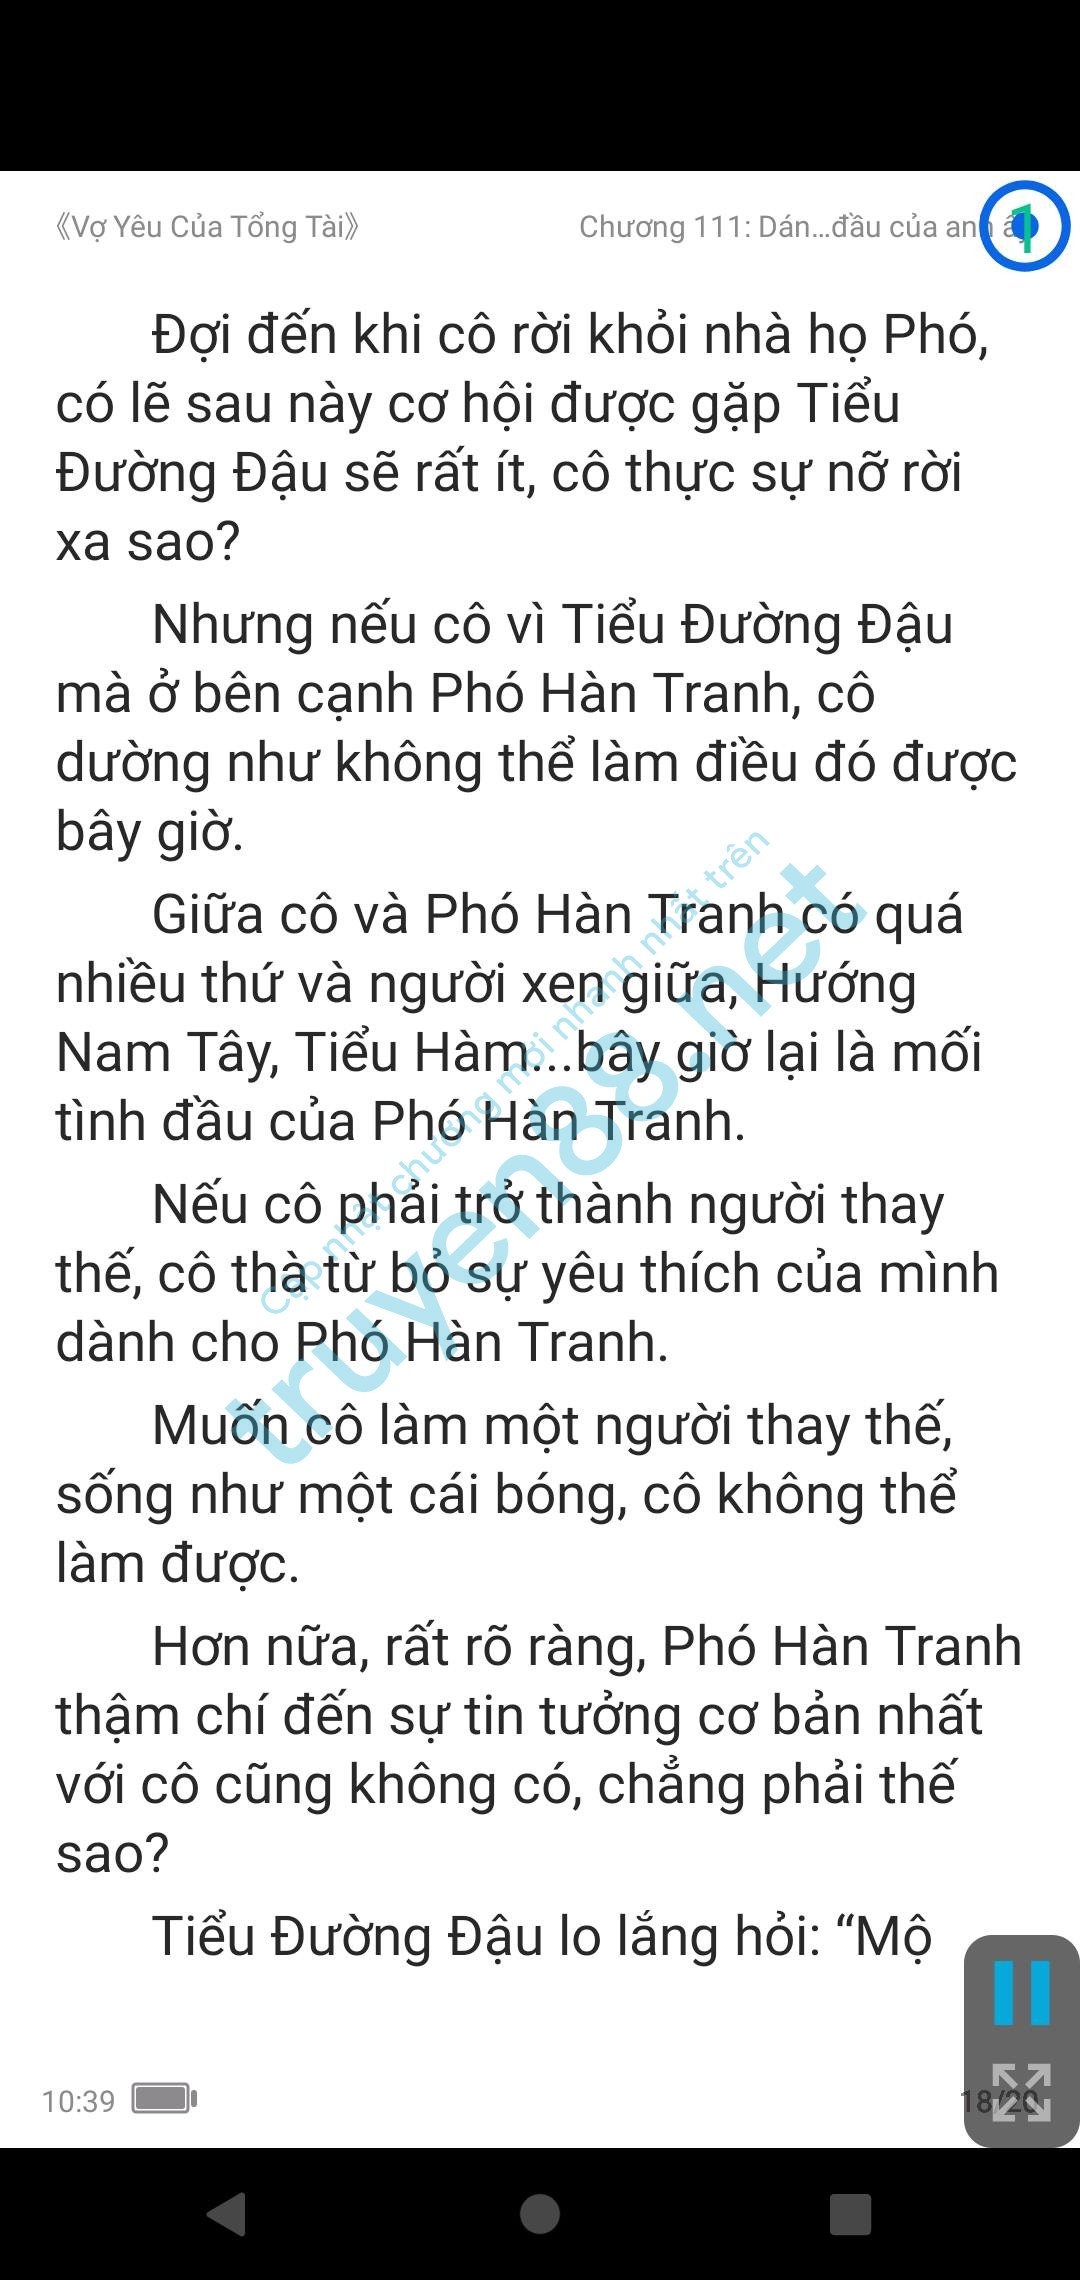 vo-yeu-cua-tong-tai-mo-vi-lan--pho-han-tranh-111-1